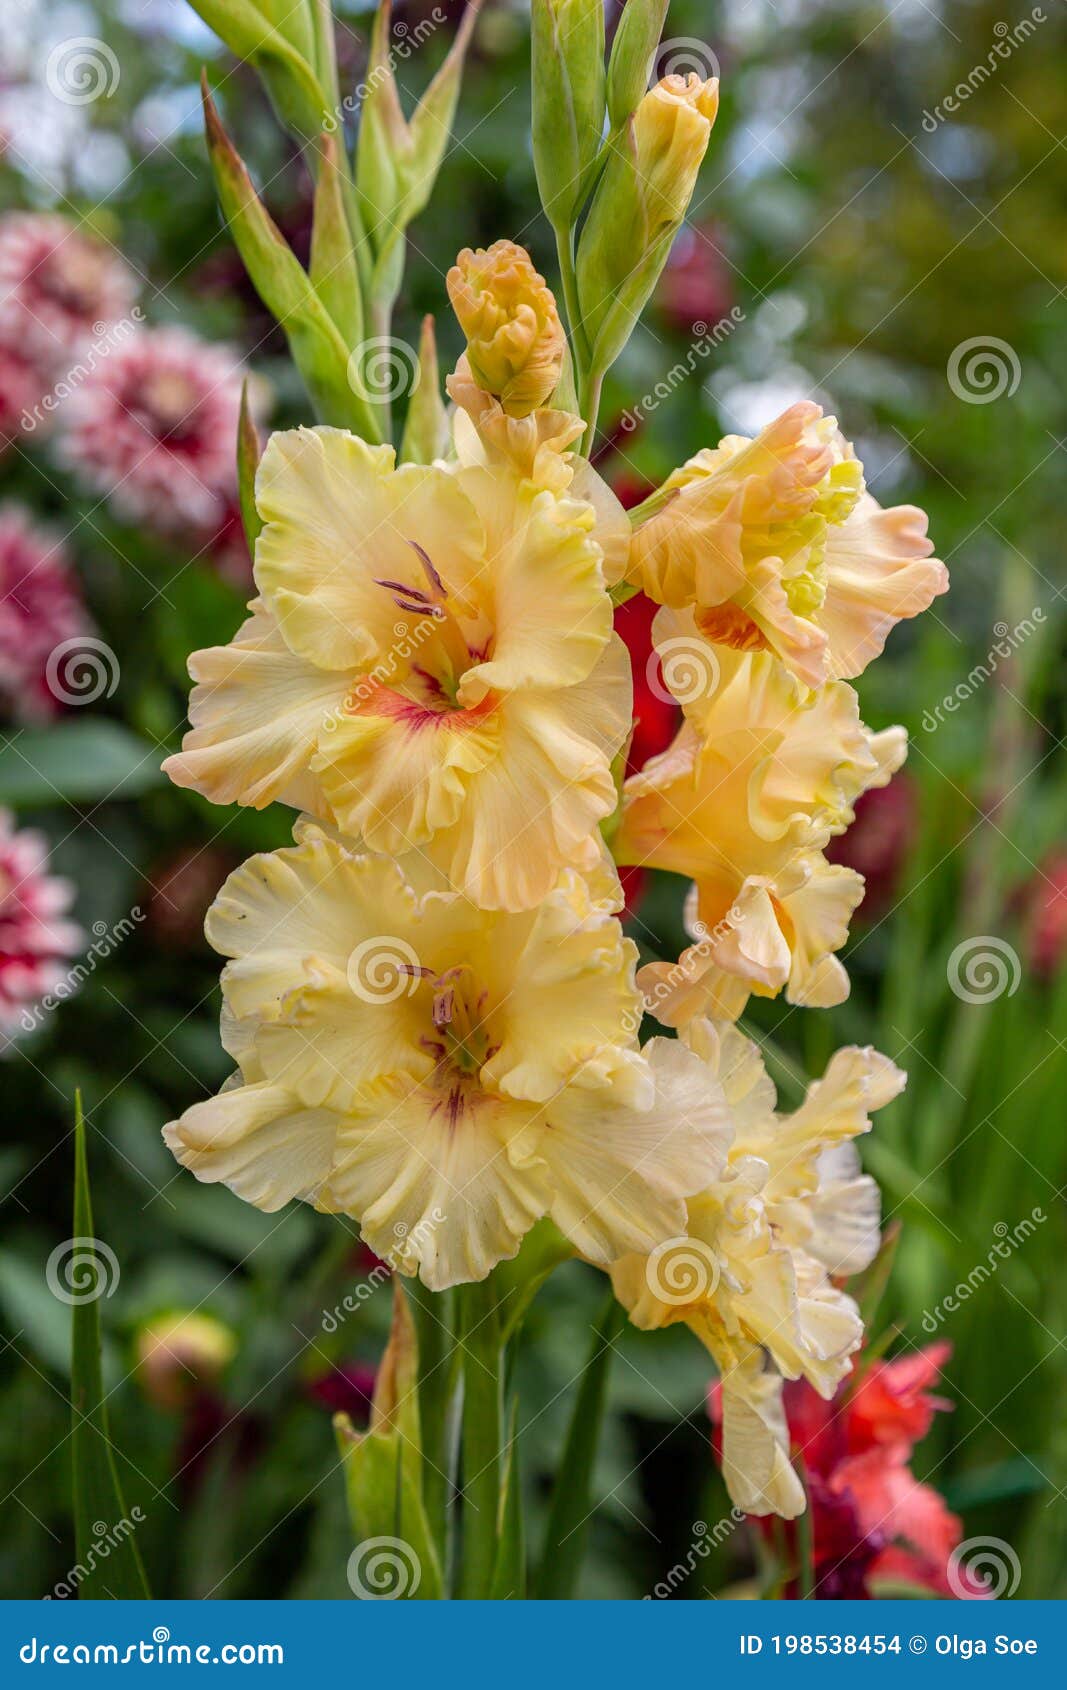 yellow flower gladiolos closeup in garden